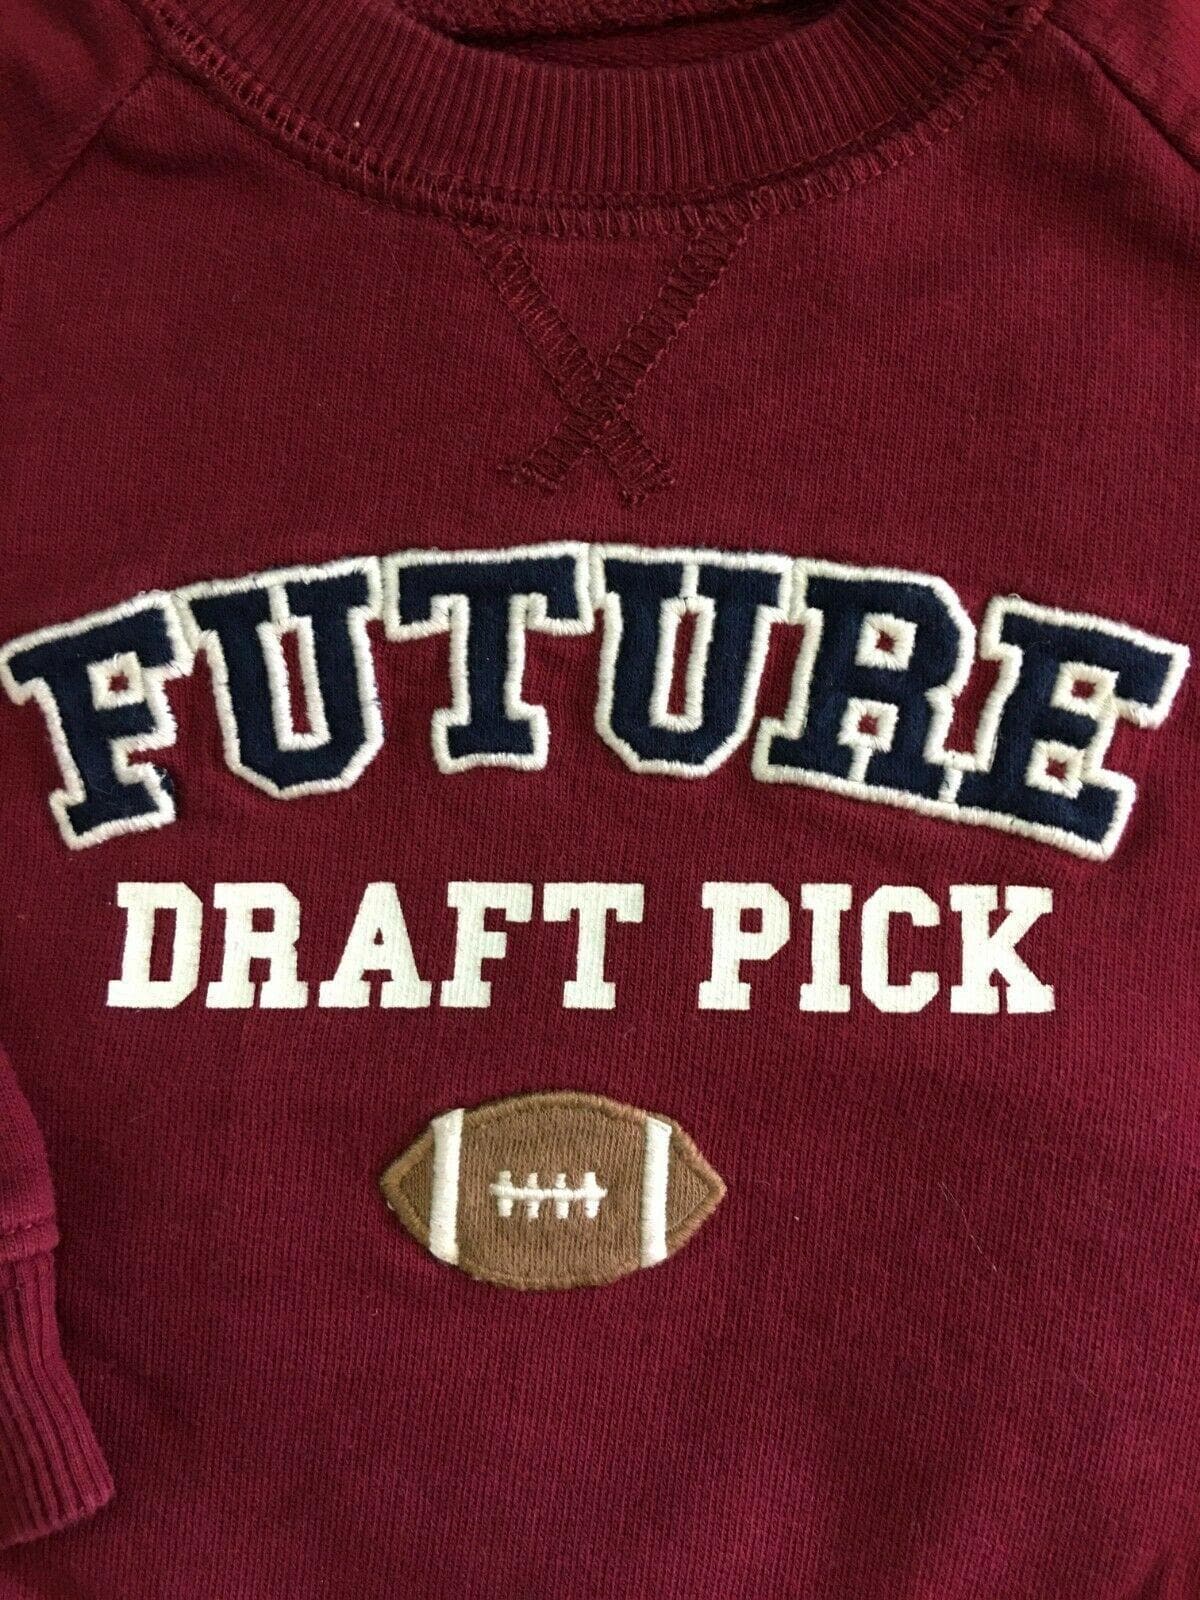 NFL NCAA American Football "Future Draft Pick" Sweatshirt Baby 6 Months